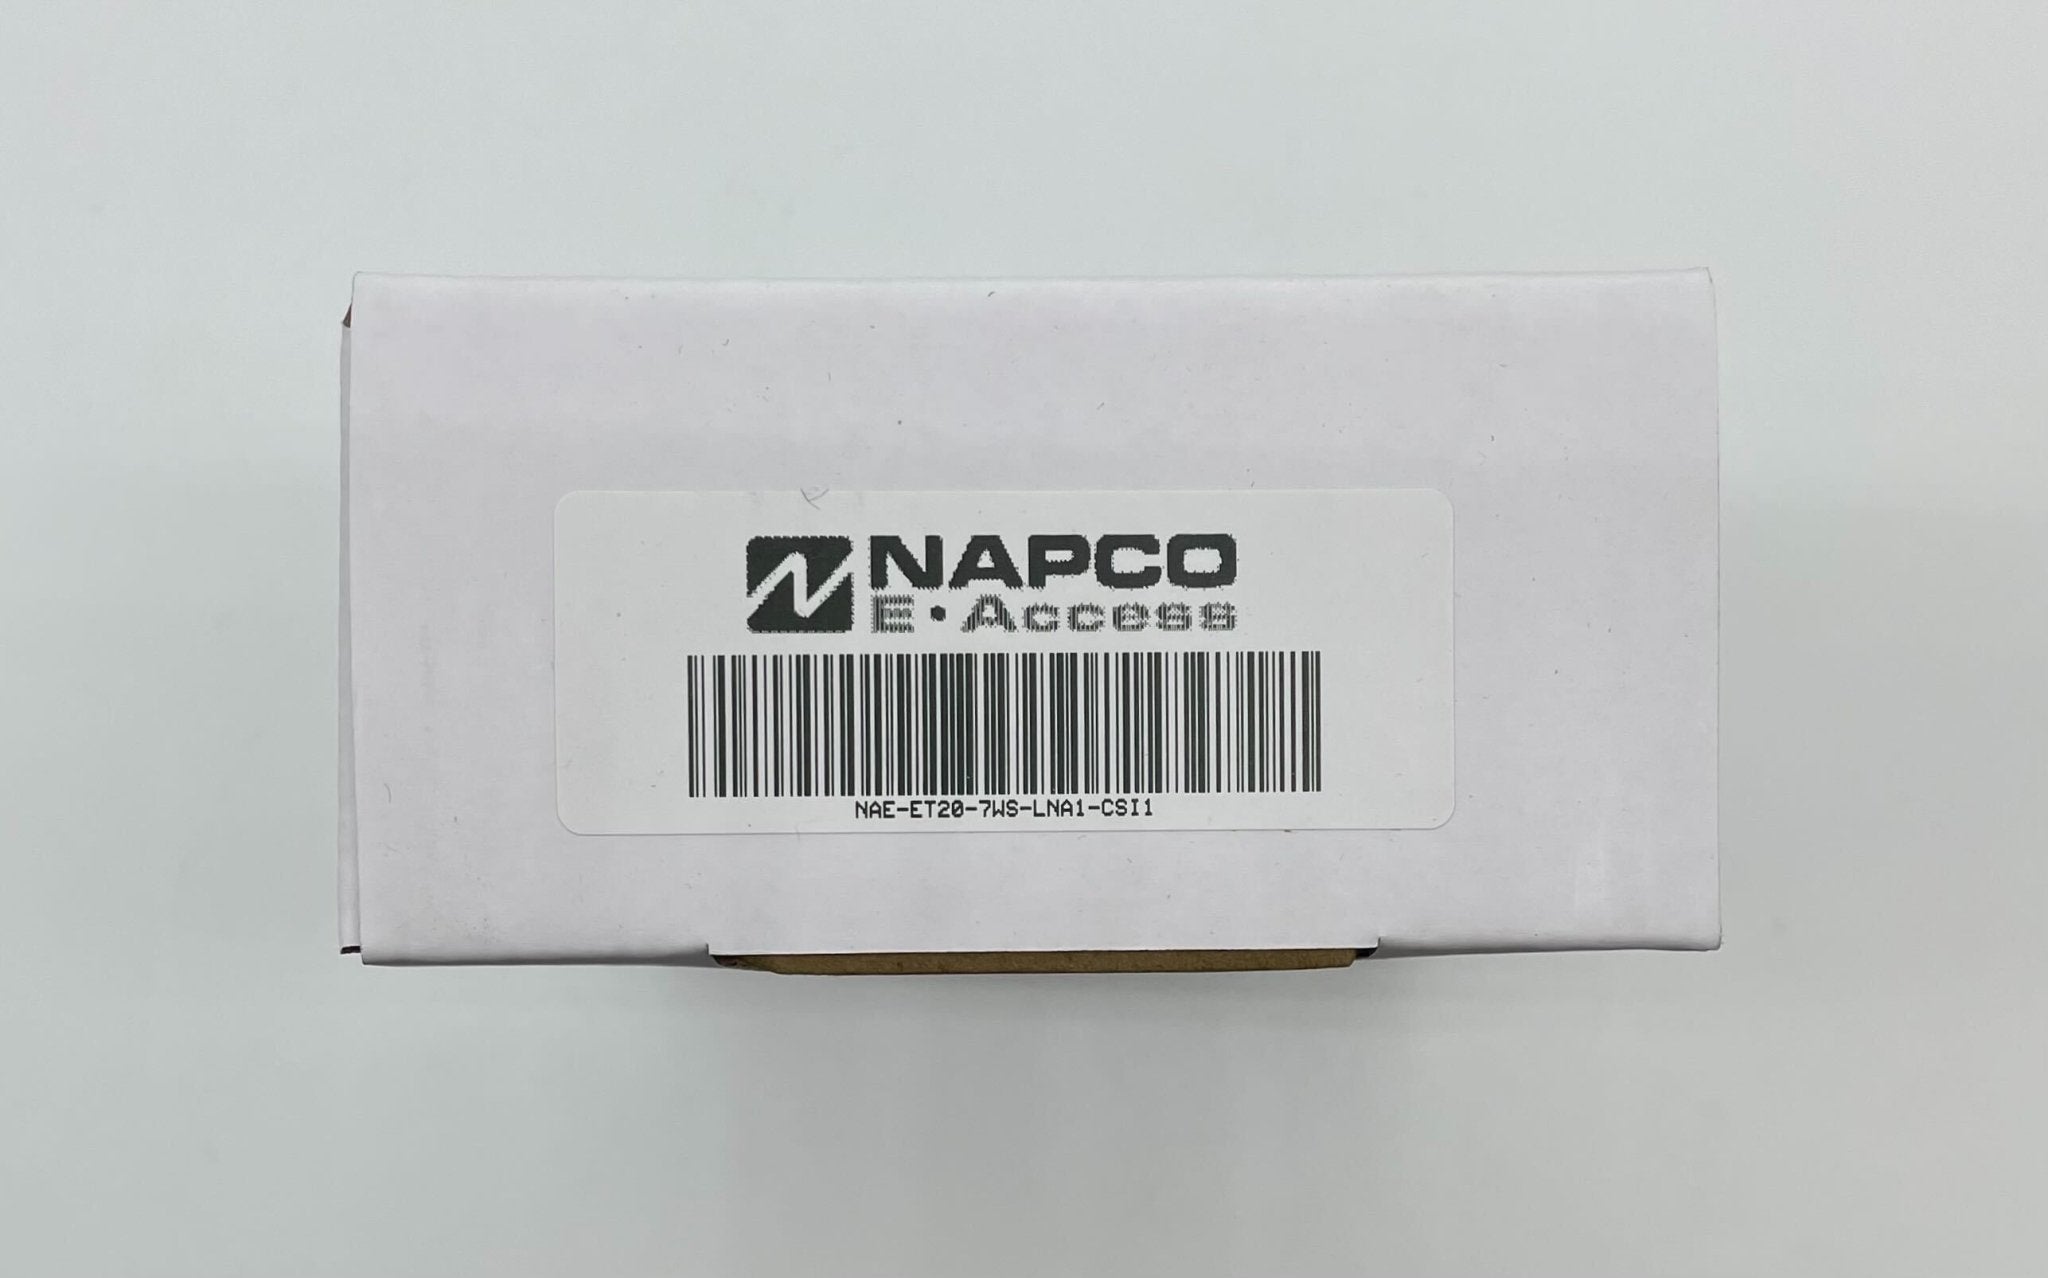 Napco NAE-ET20 - The Fire Alarm Supplier